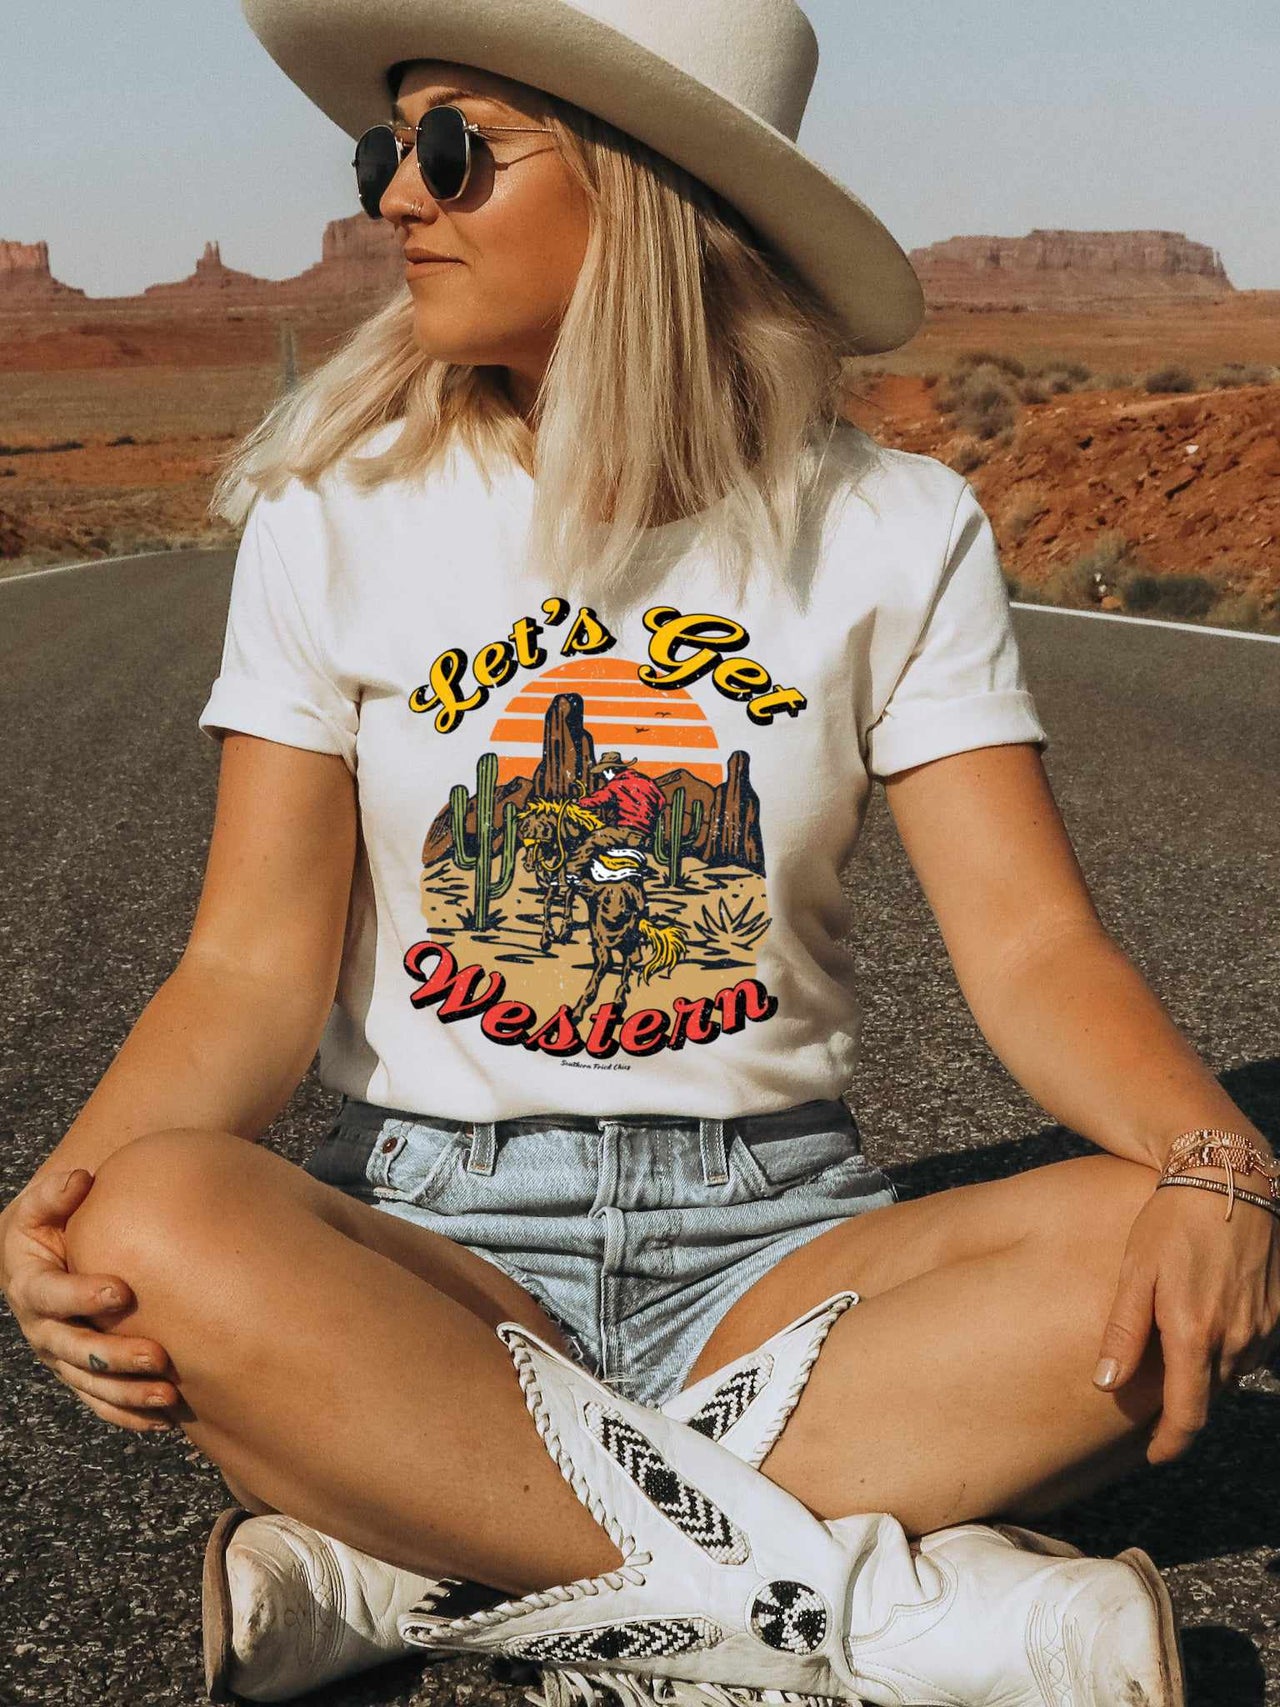 Let's Get Western T shirt